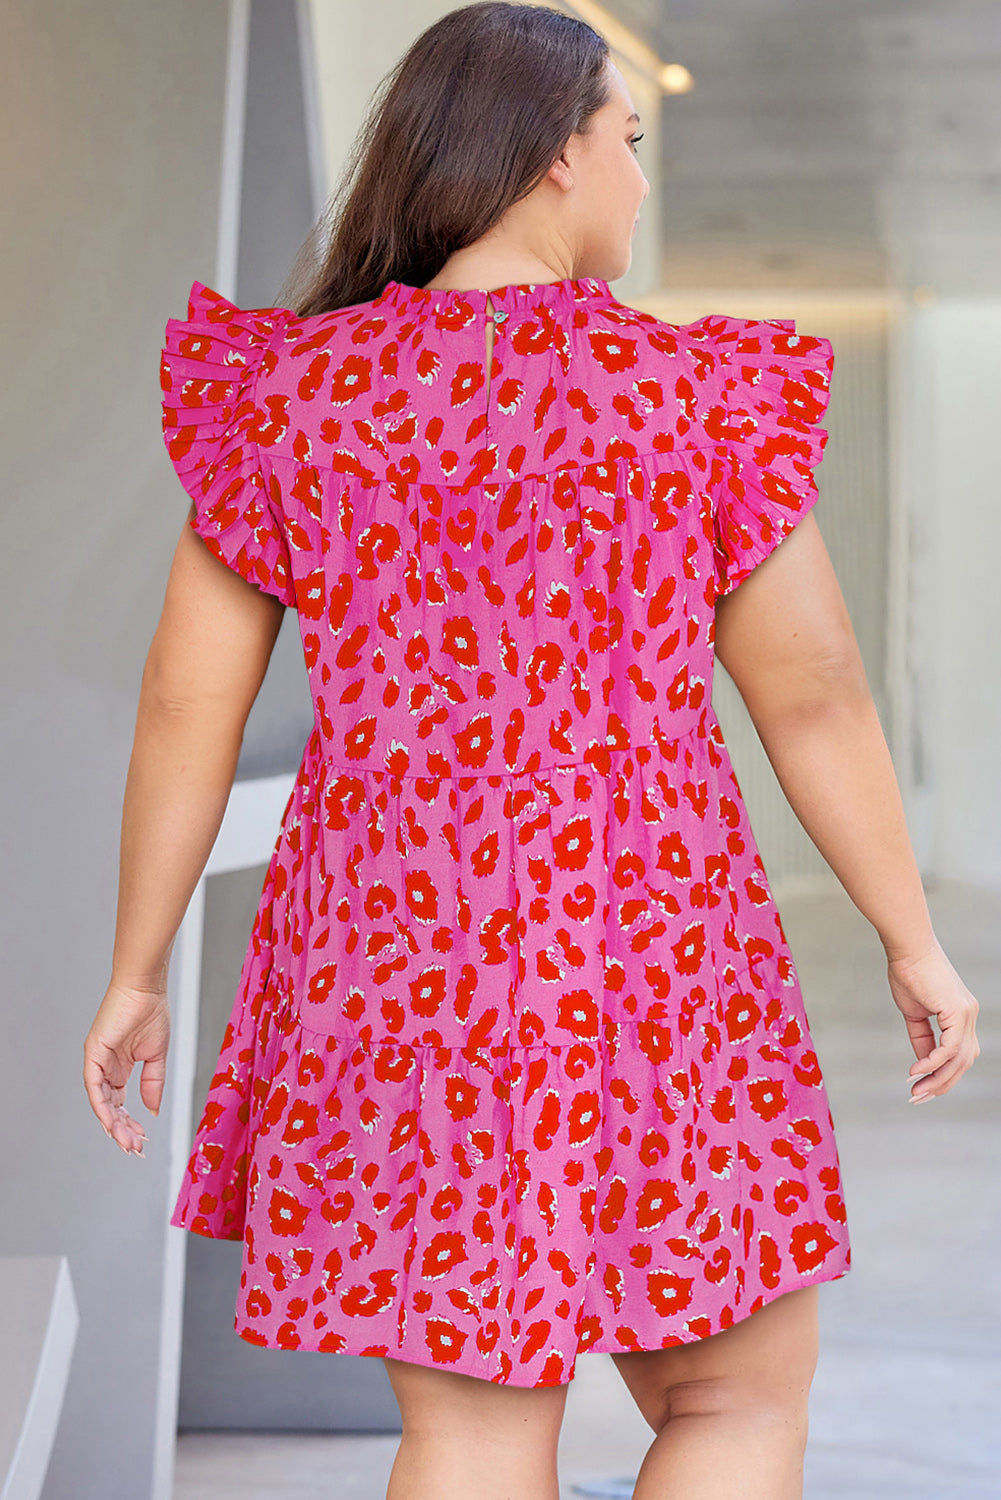 Leopard Print Frilled Sleeveless Plus Size Mini Dress